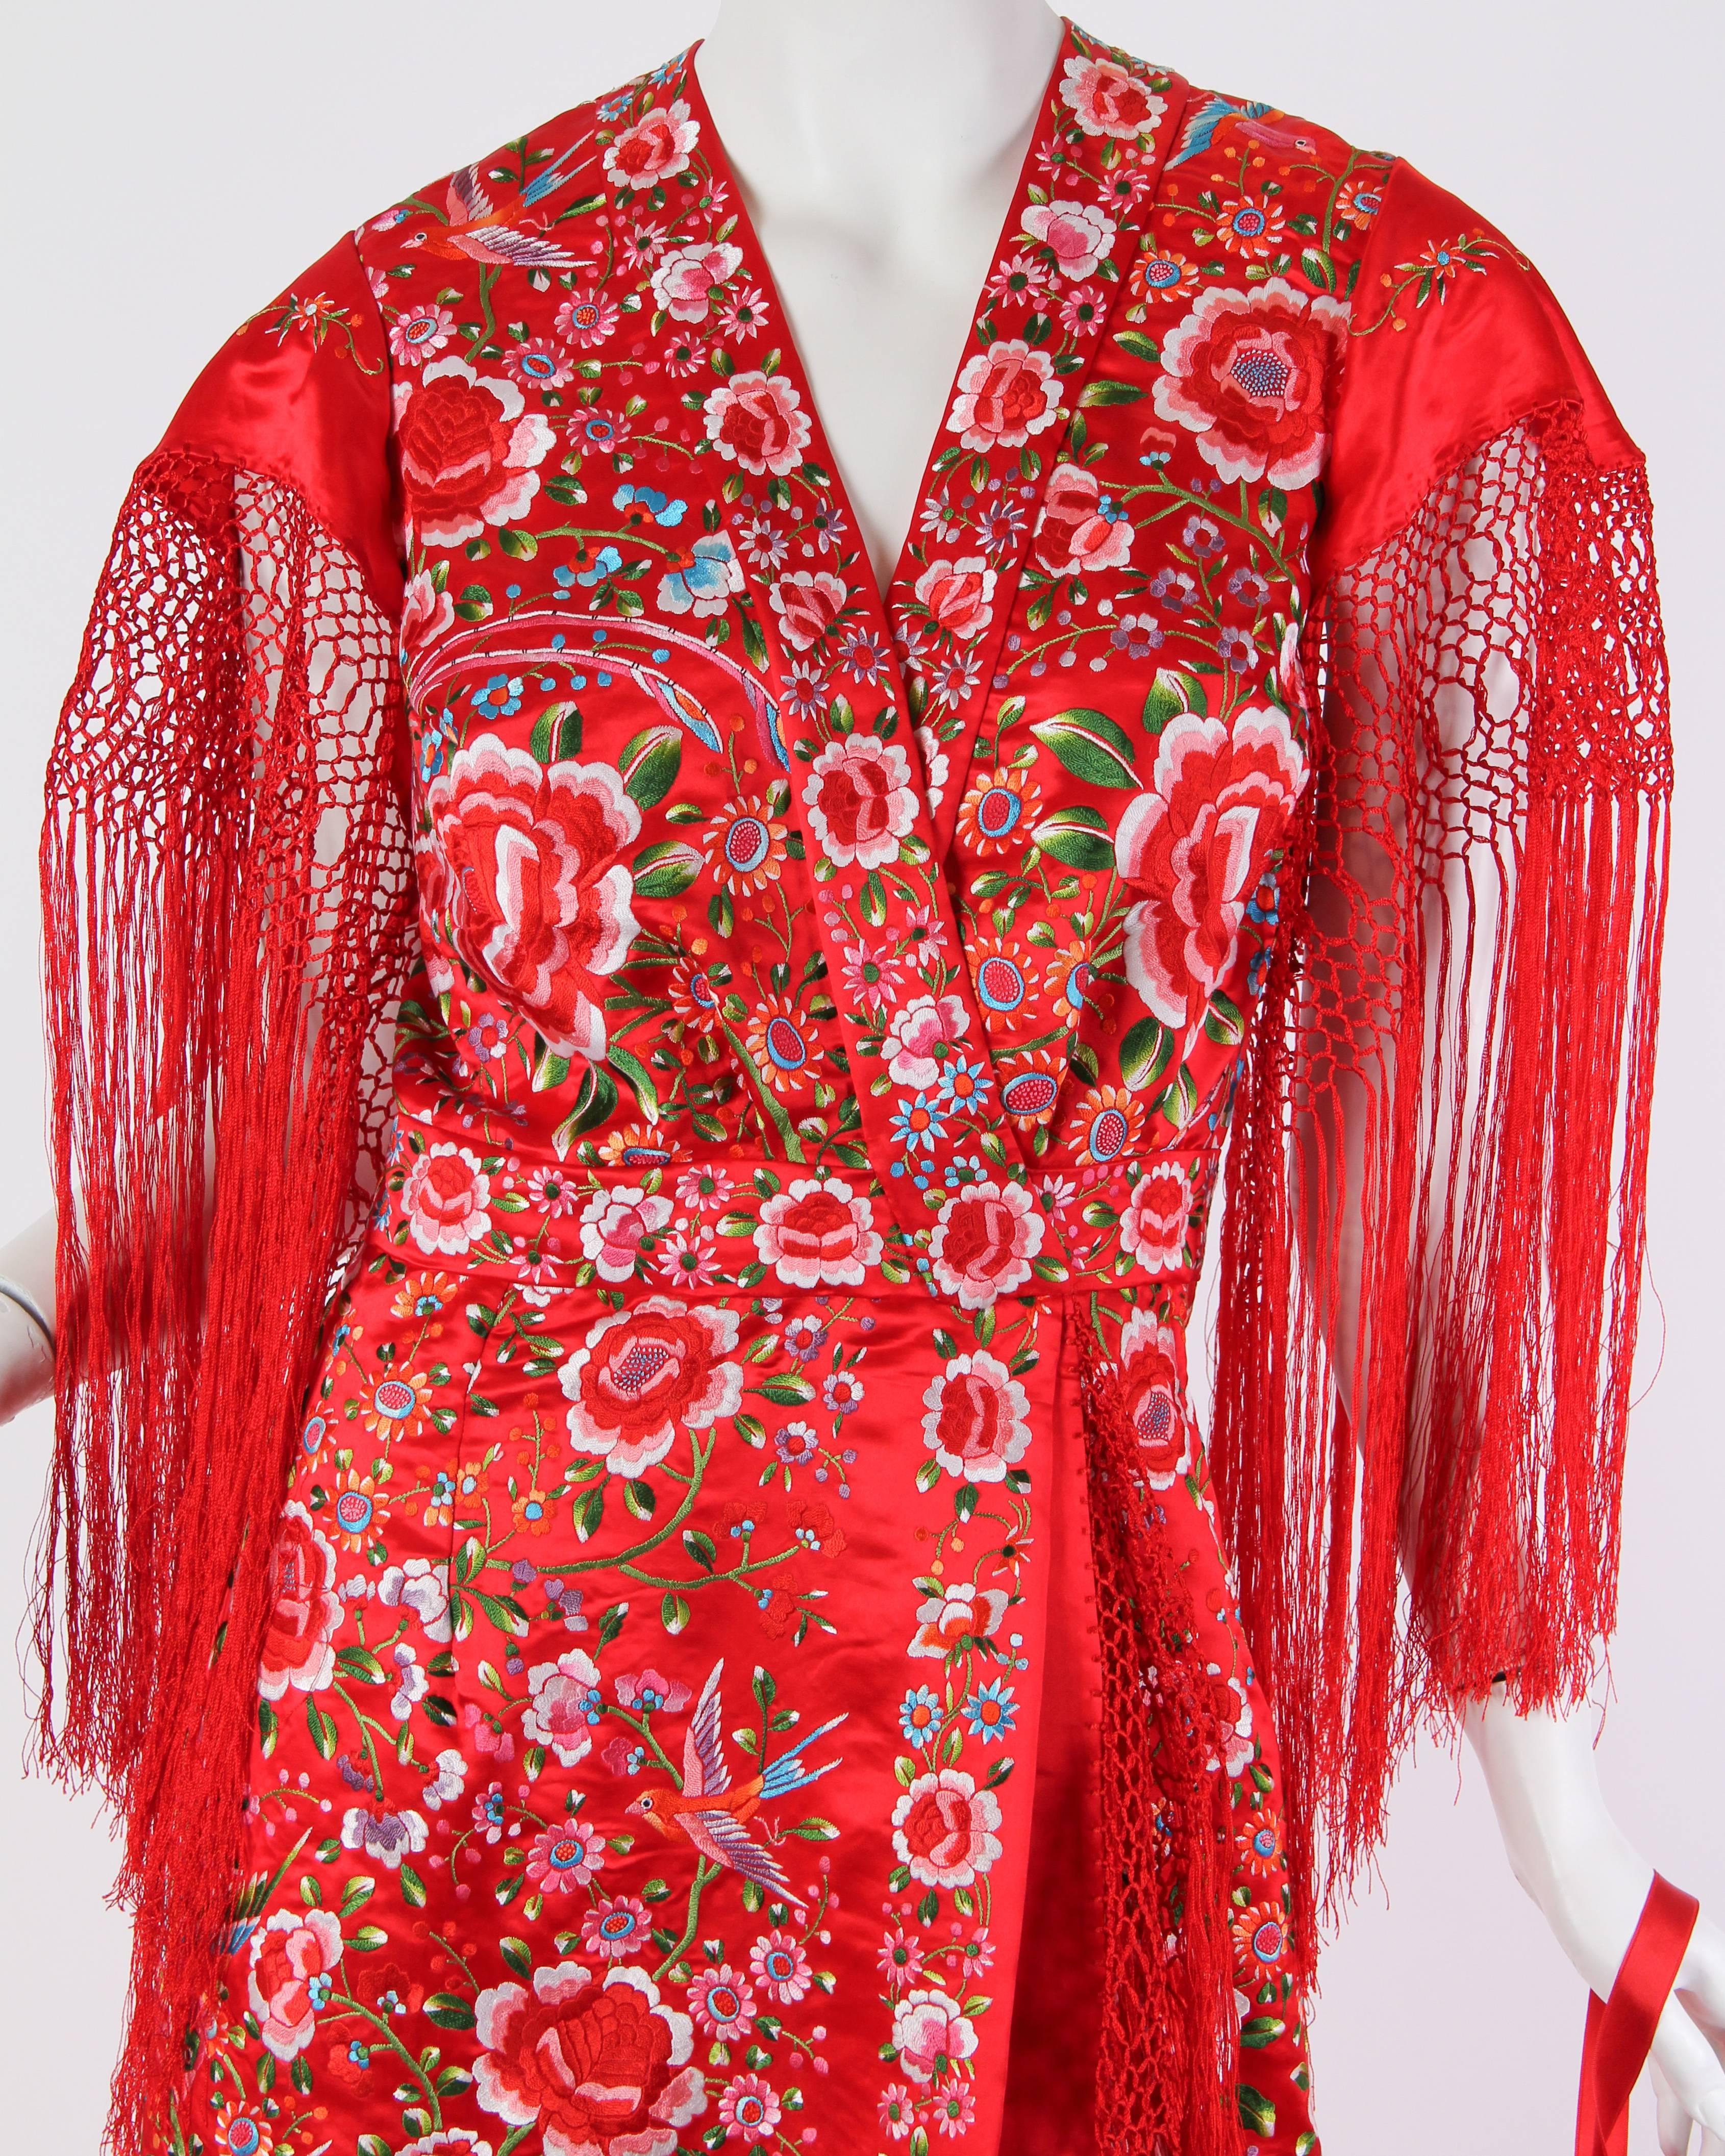 Phenomenal Hand-Embroidered Chinese Shawl Dress with Fringe 1